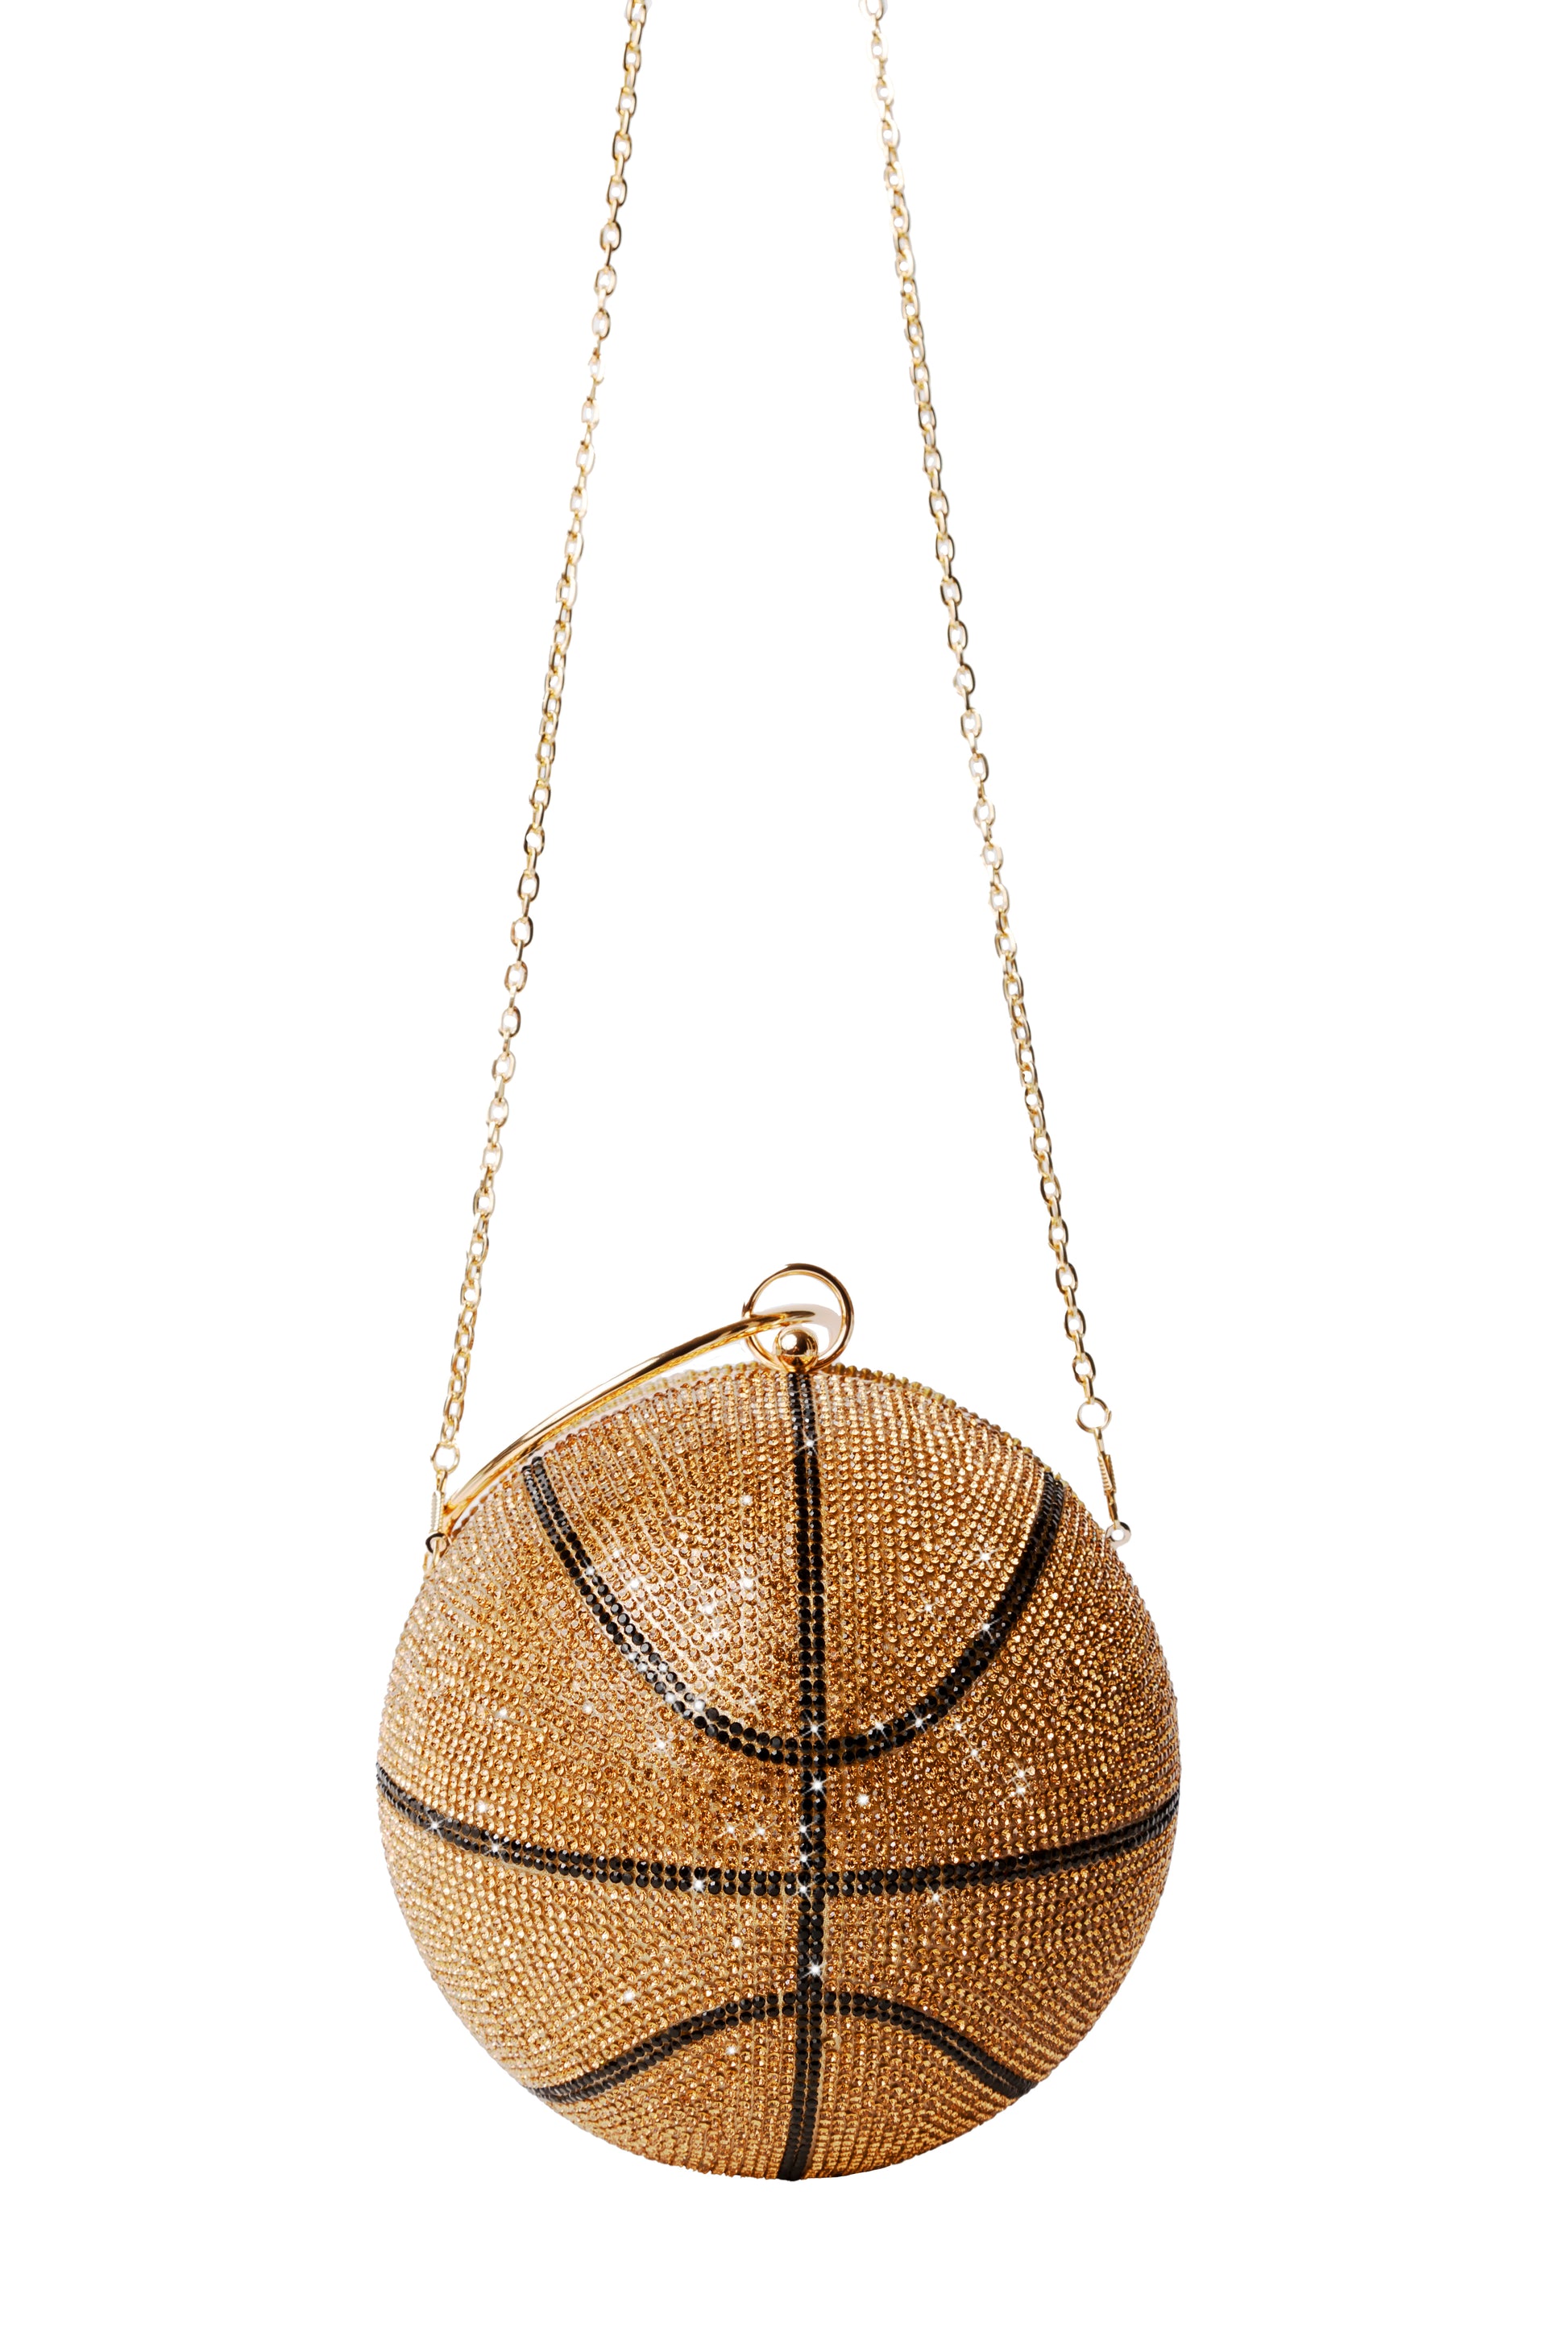 Bedazzled Crystal Basketball Handbag Purse 